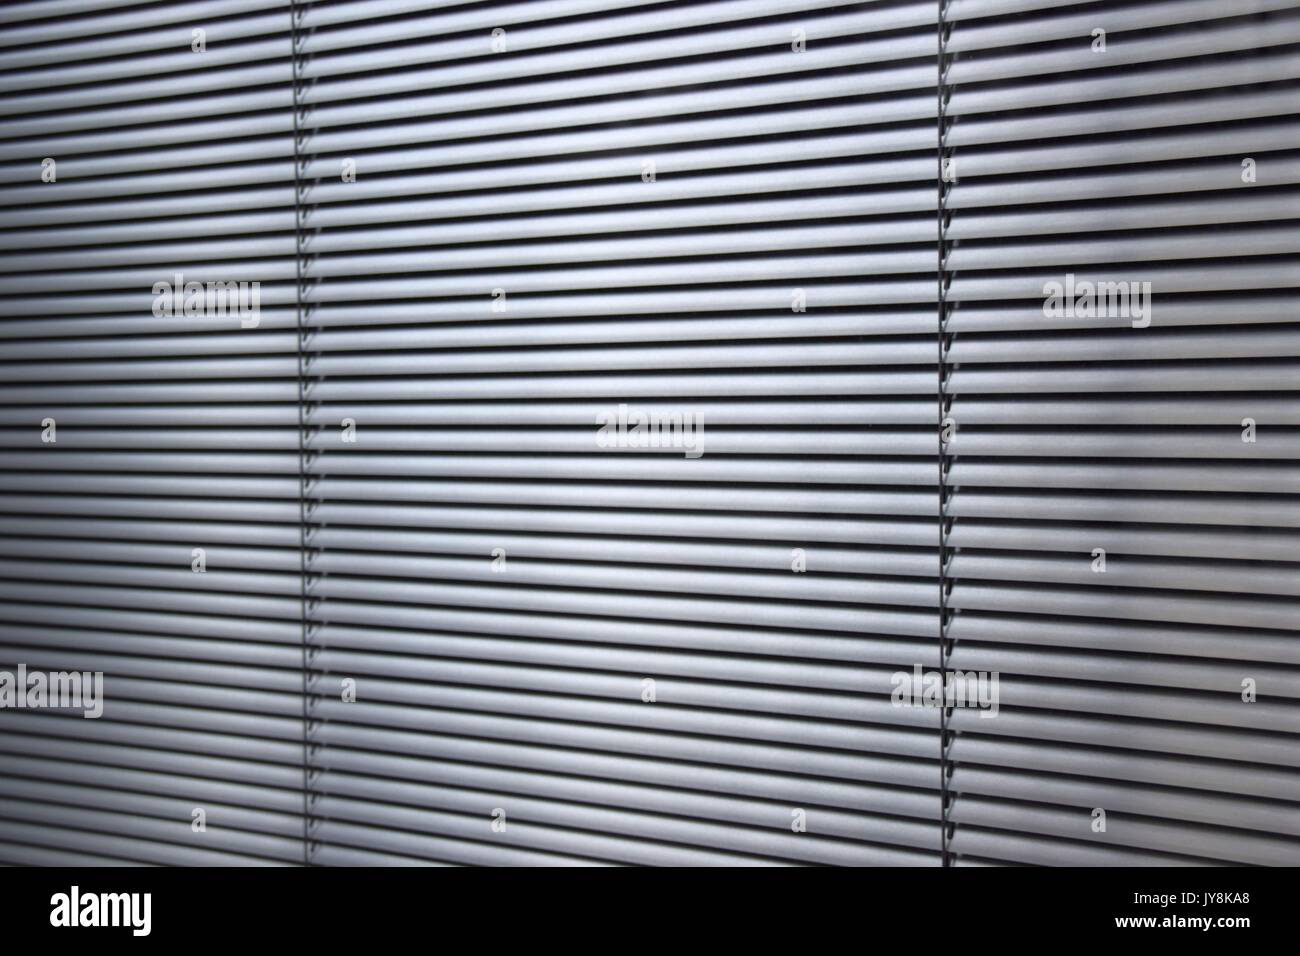 Metall Verschluss hinter einem Büro Fenster, Jalousien hinter einem  Fenster, Jalousien und Vorhänge, horizontalen Lamellen aus Metall, Markisen  Stockfotografie - Alamy